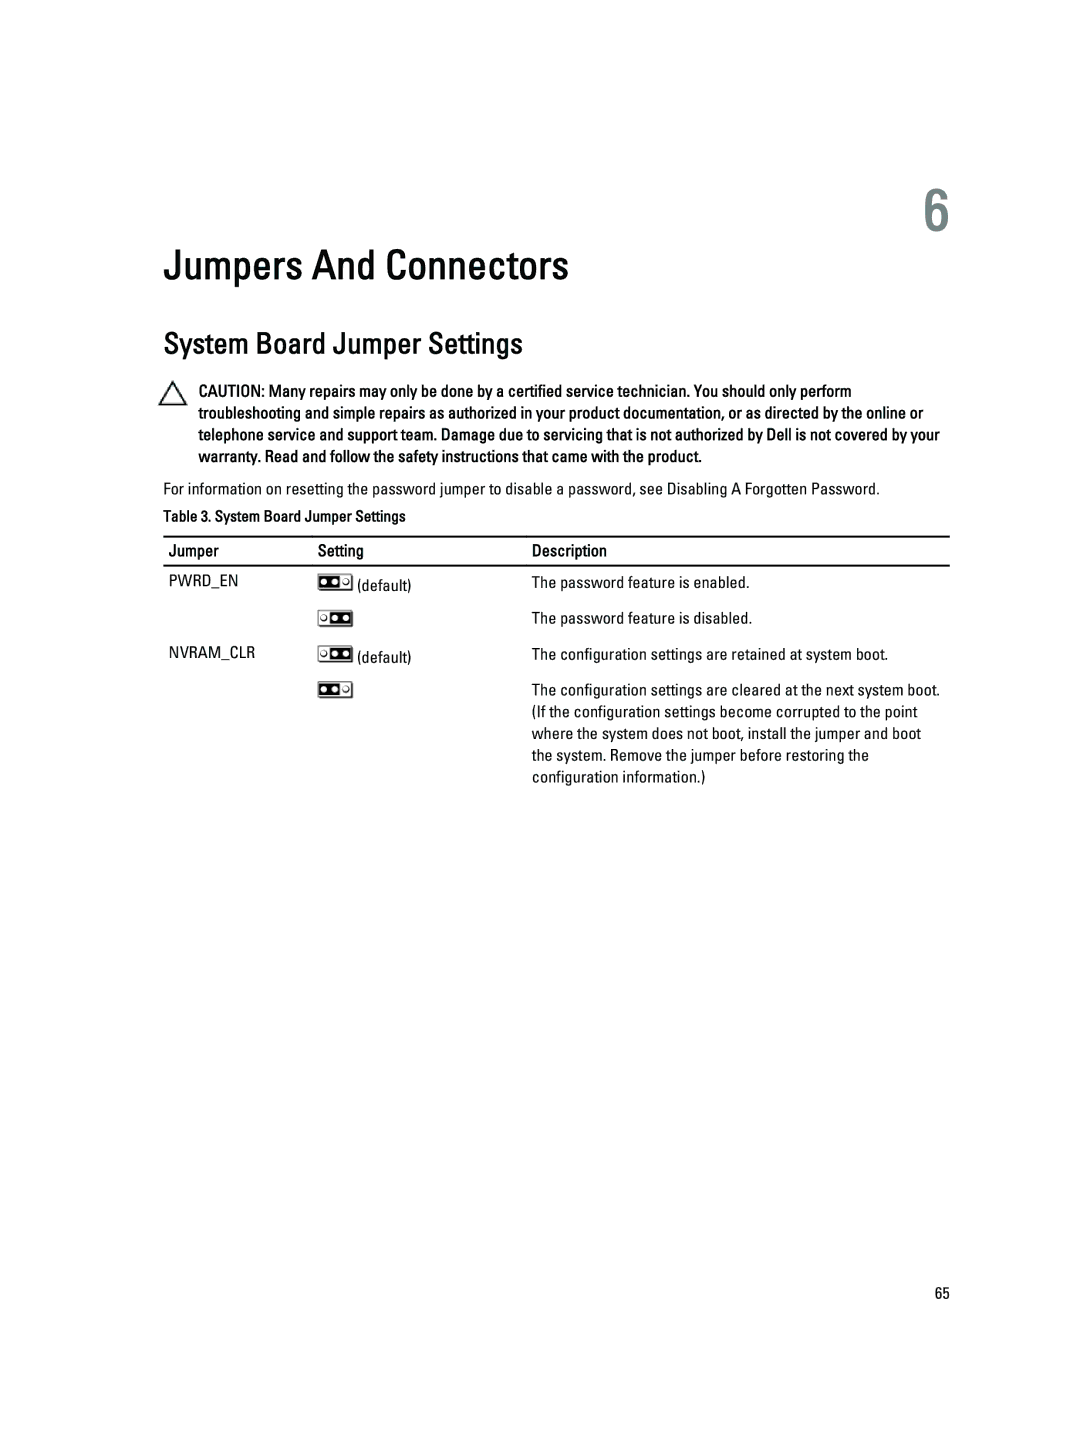 Dell M620 owner manual System Board Jumper Settings, Jumper Setting Description 